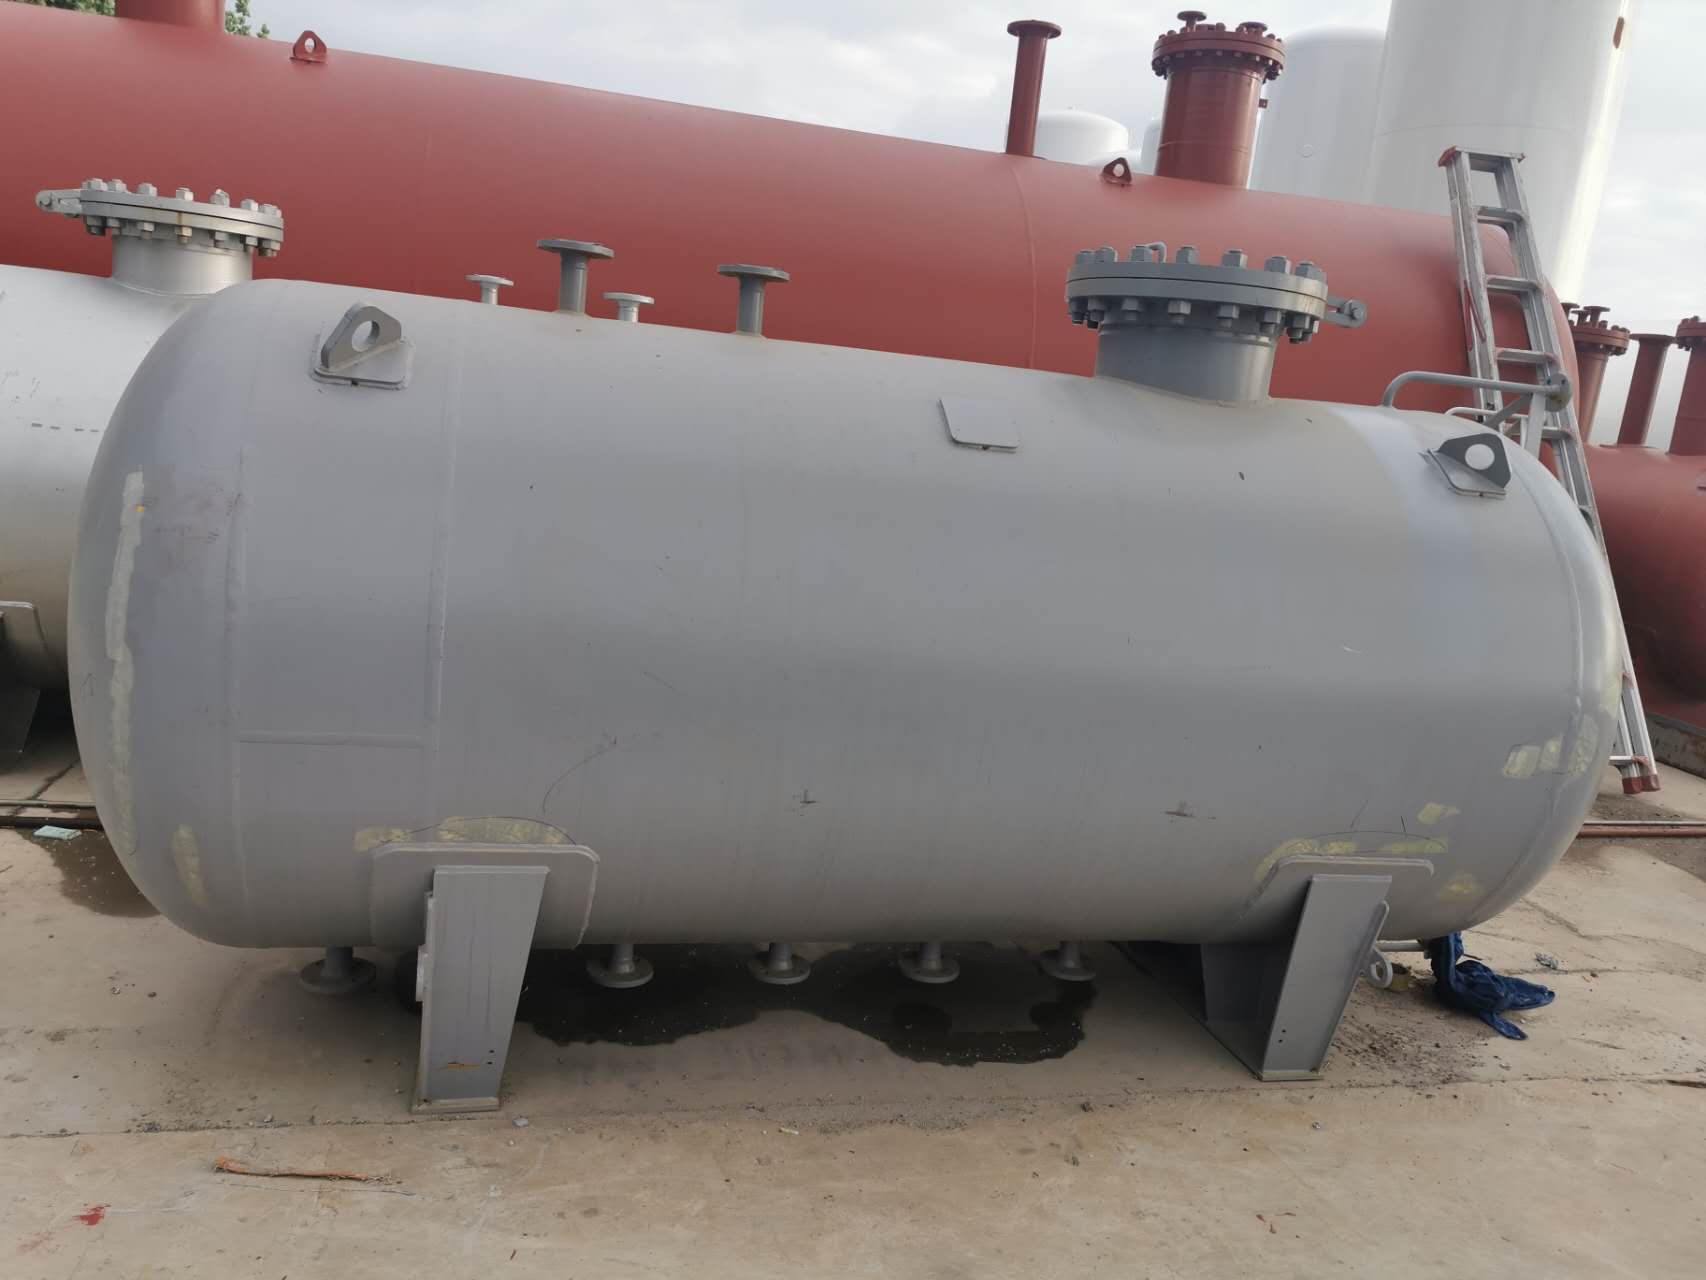 Safe use of LPG storage tanks